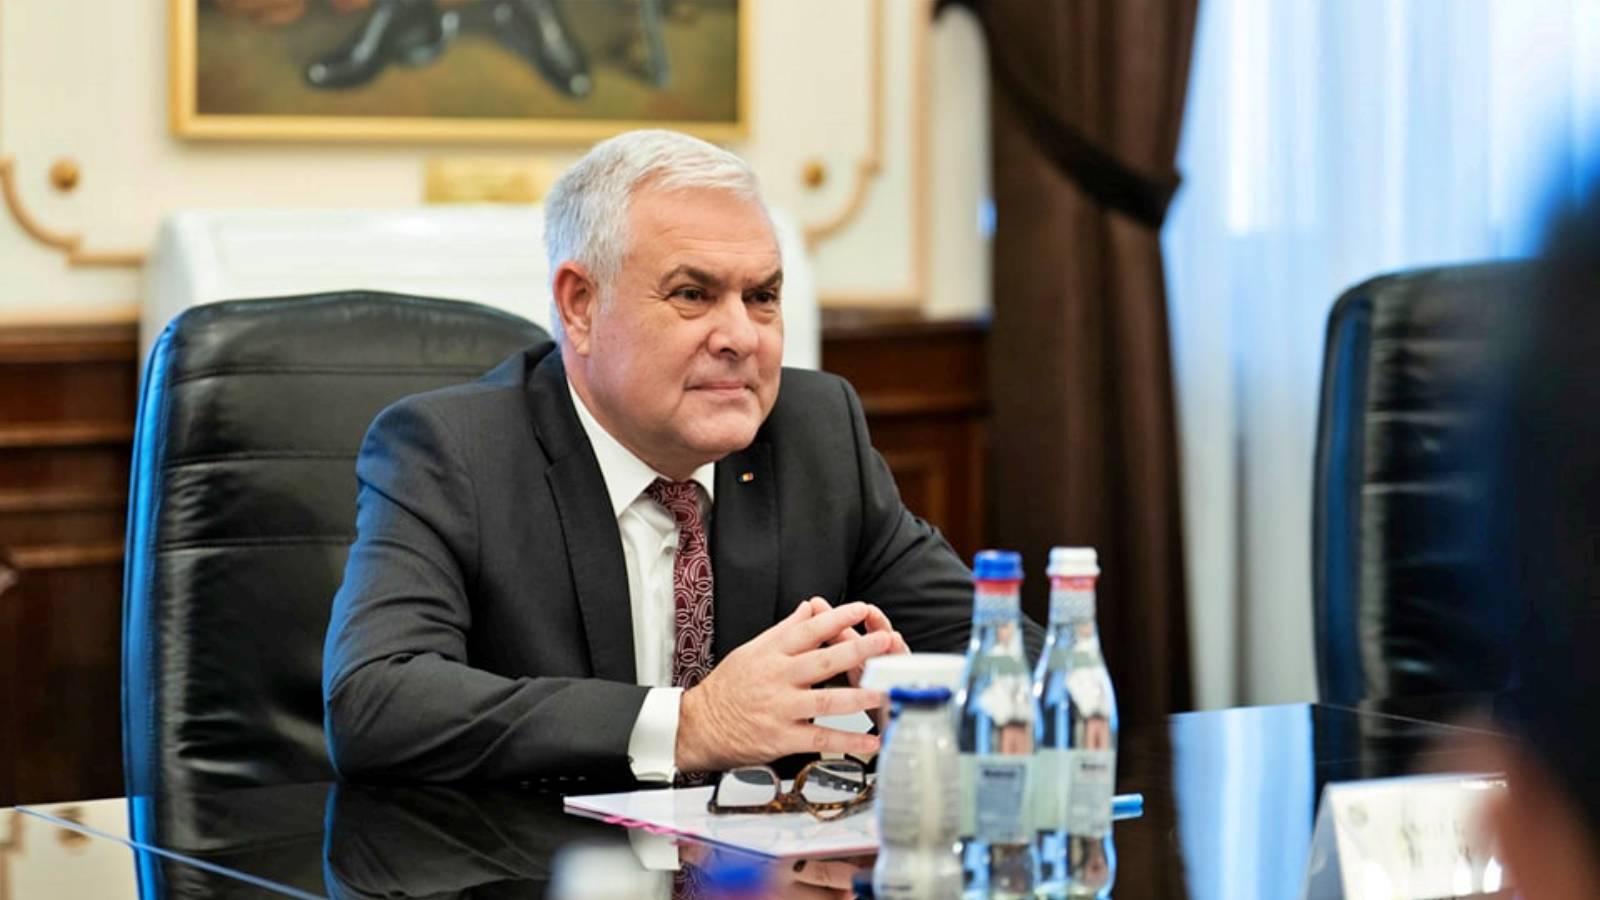 Ministrul Apararii Oficiala Informare ULTIM MOMENT Legata Activitatile Importante Romania